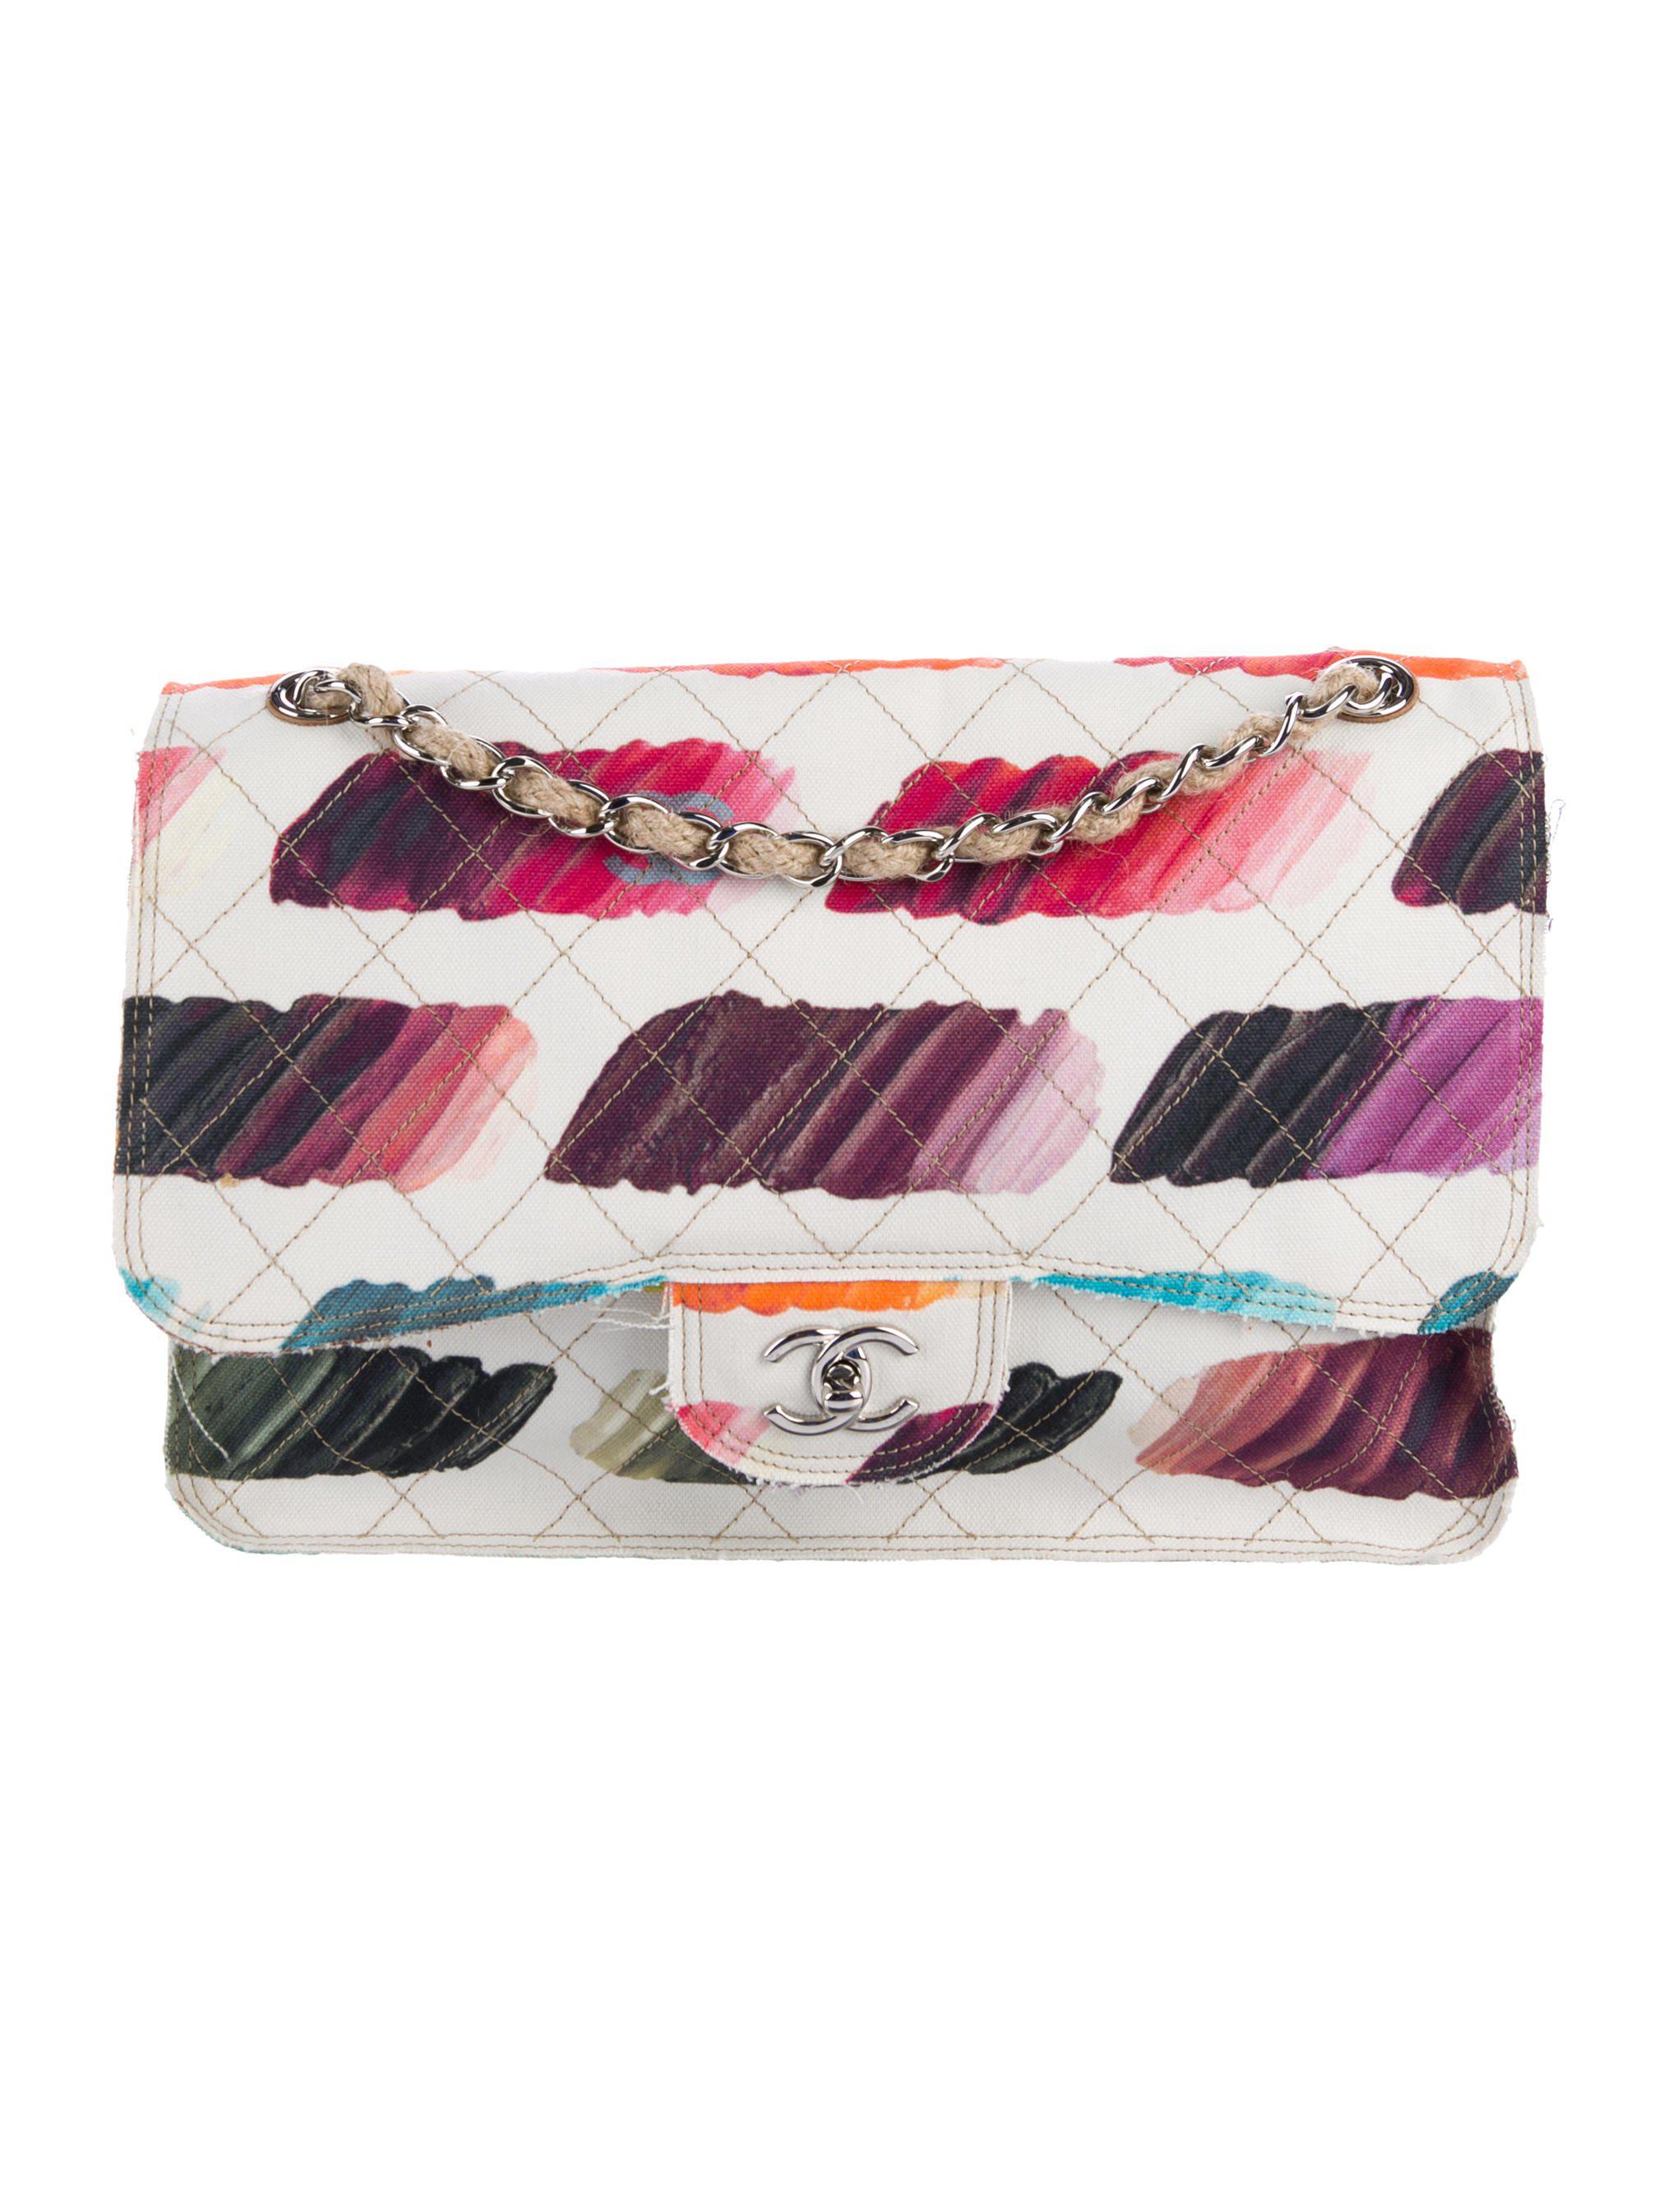 Chanel Watercolor Bag at GetDrawings | Free download